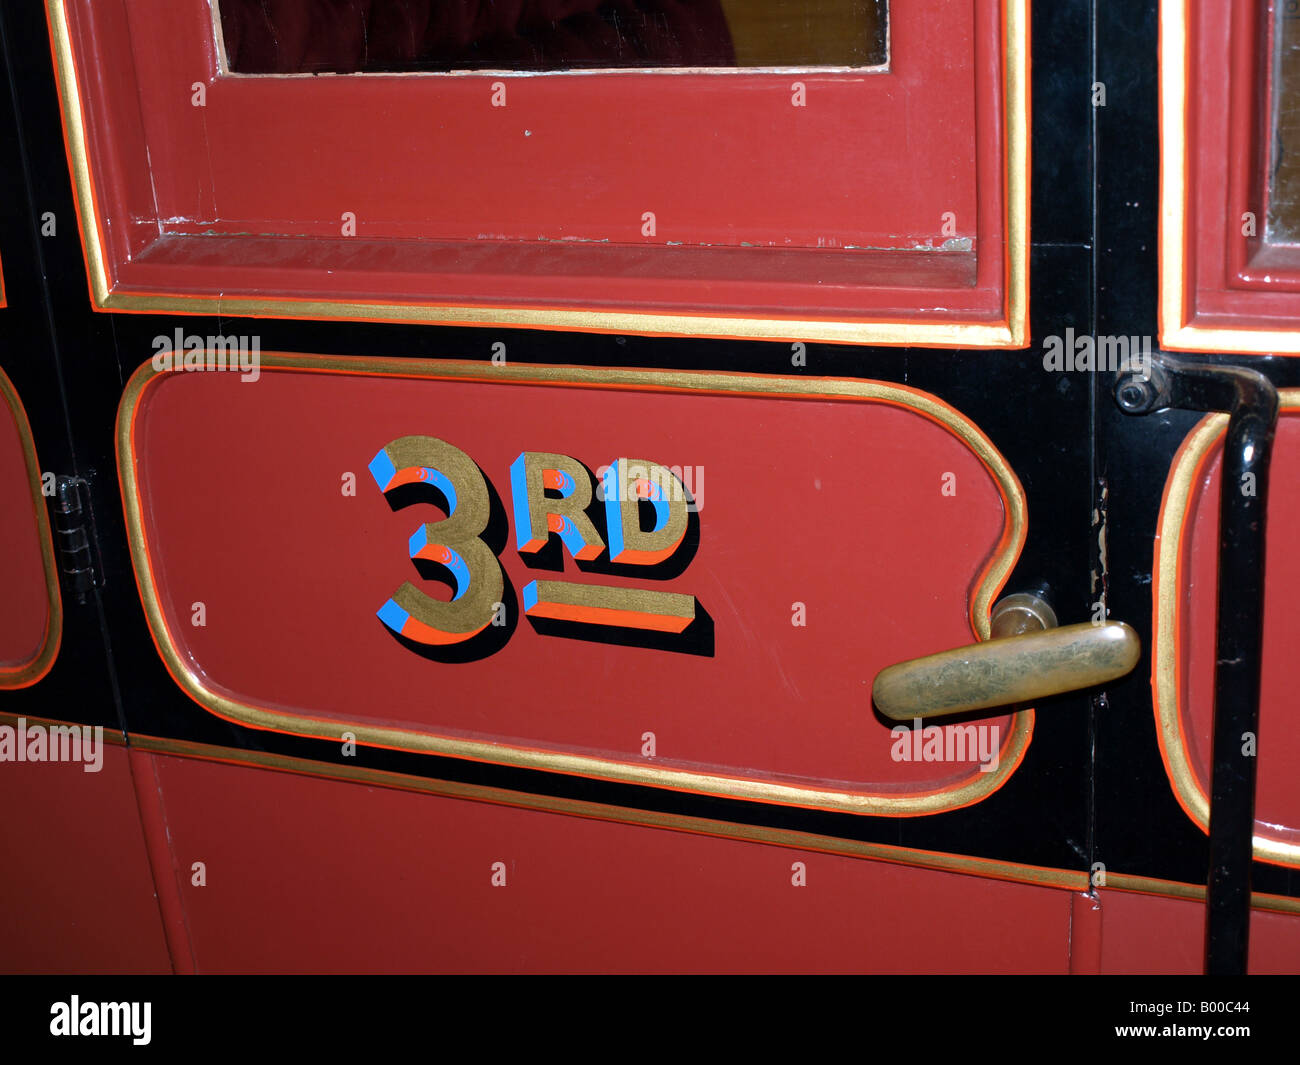 a-3rd-class-railway-carriage-door-stock-photo-alamy